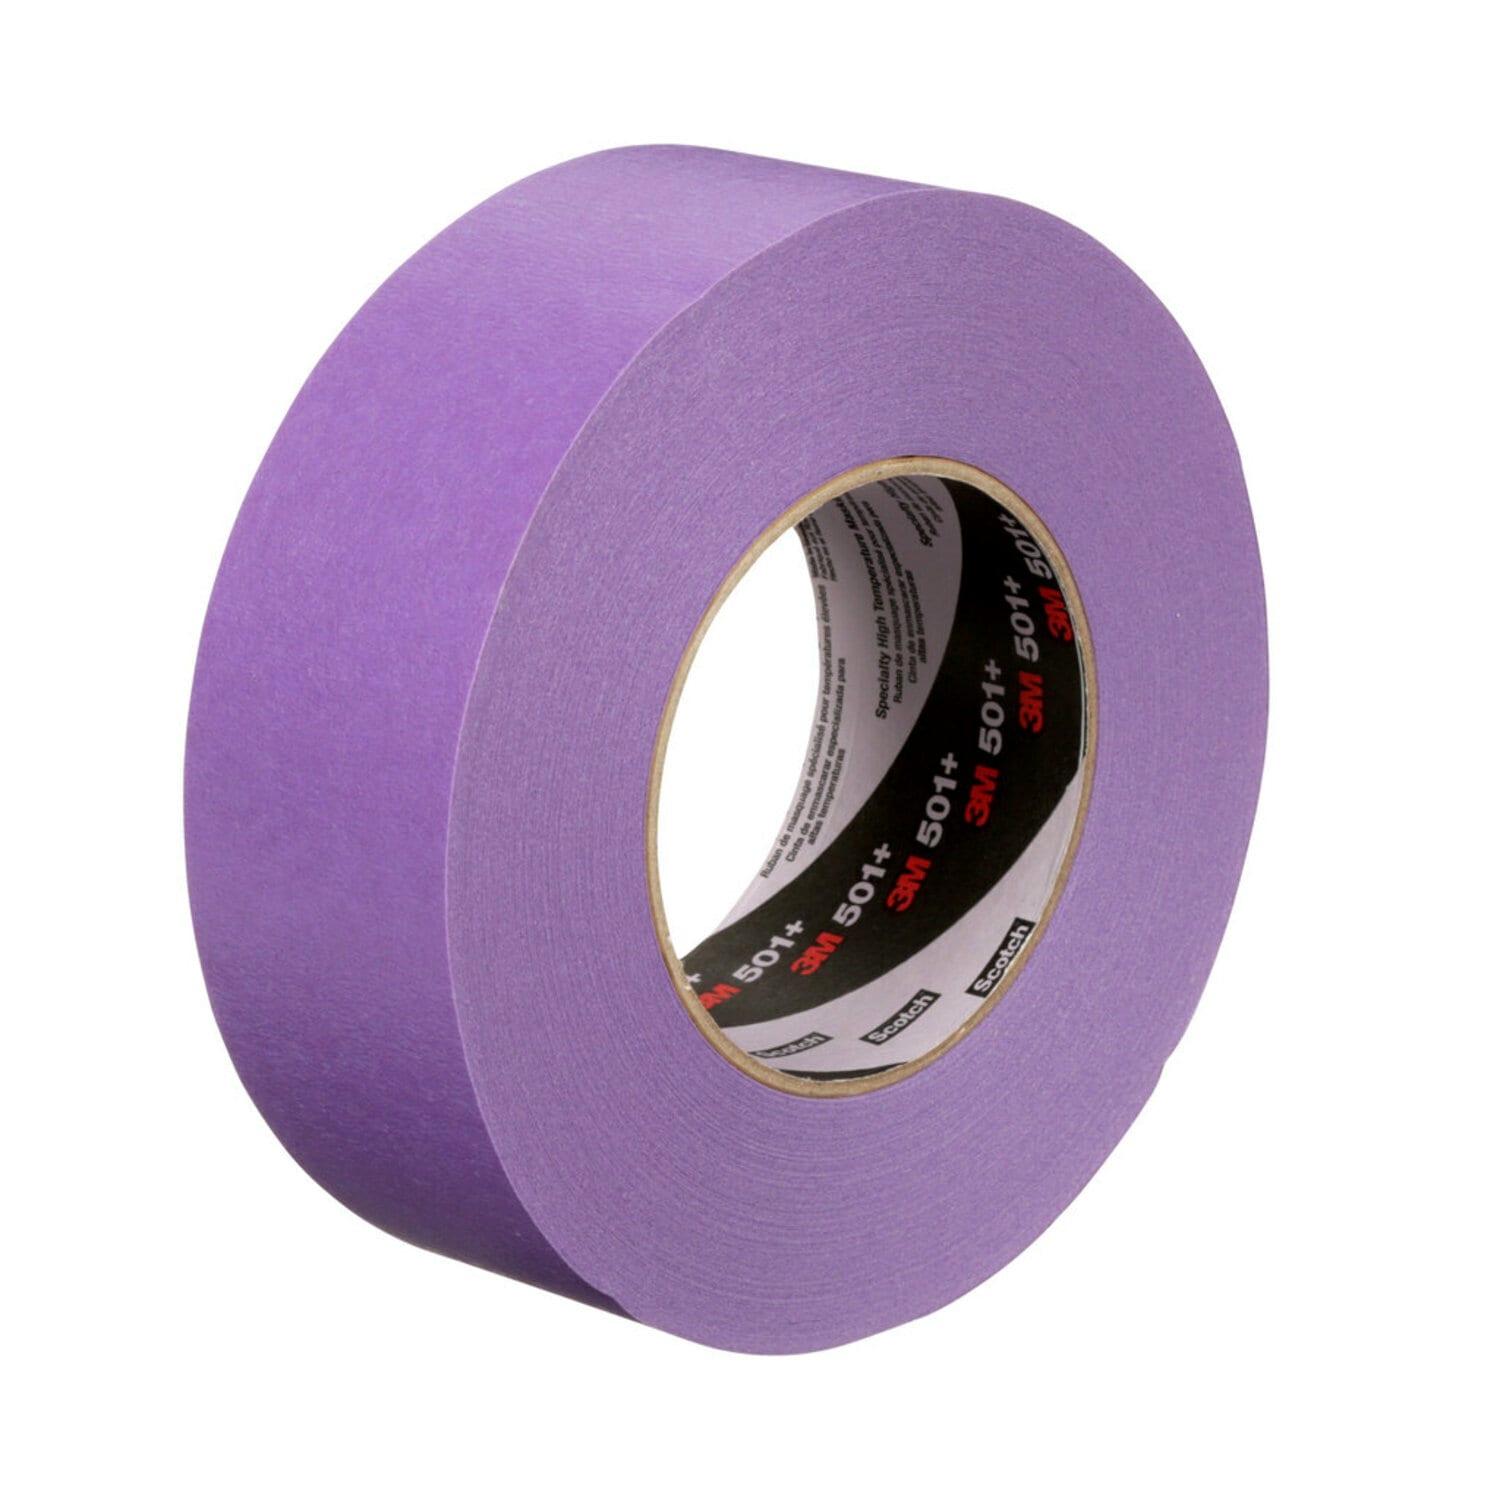 7100086764 - "3M Specialty High Temperature Masking Tape 501+, Purple, 48 mm x 55
m,
 6.0 mil, 24 Rolls/Case"